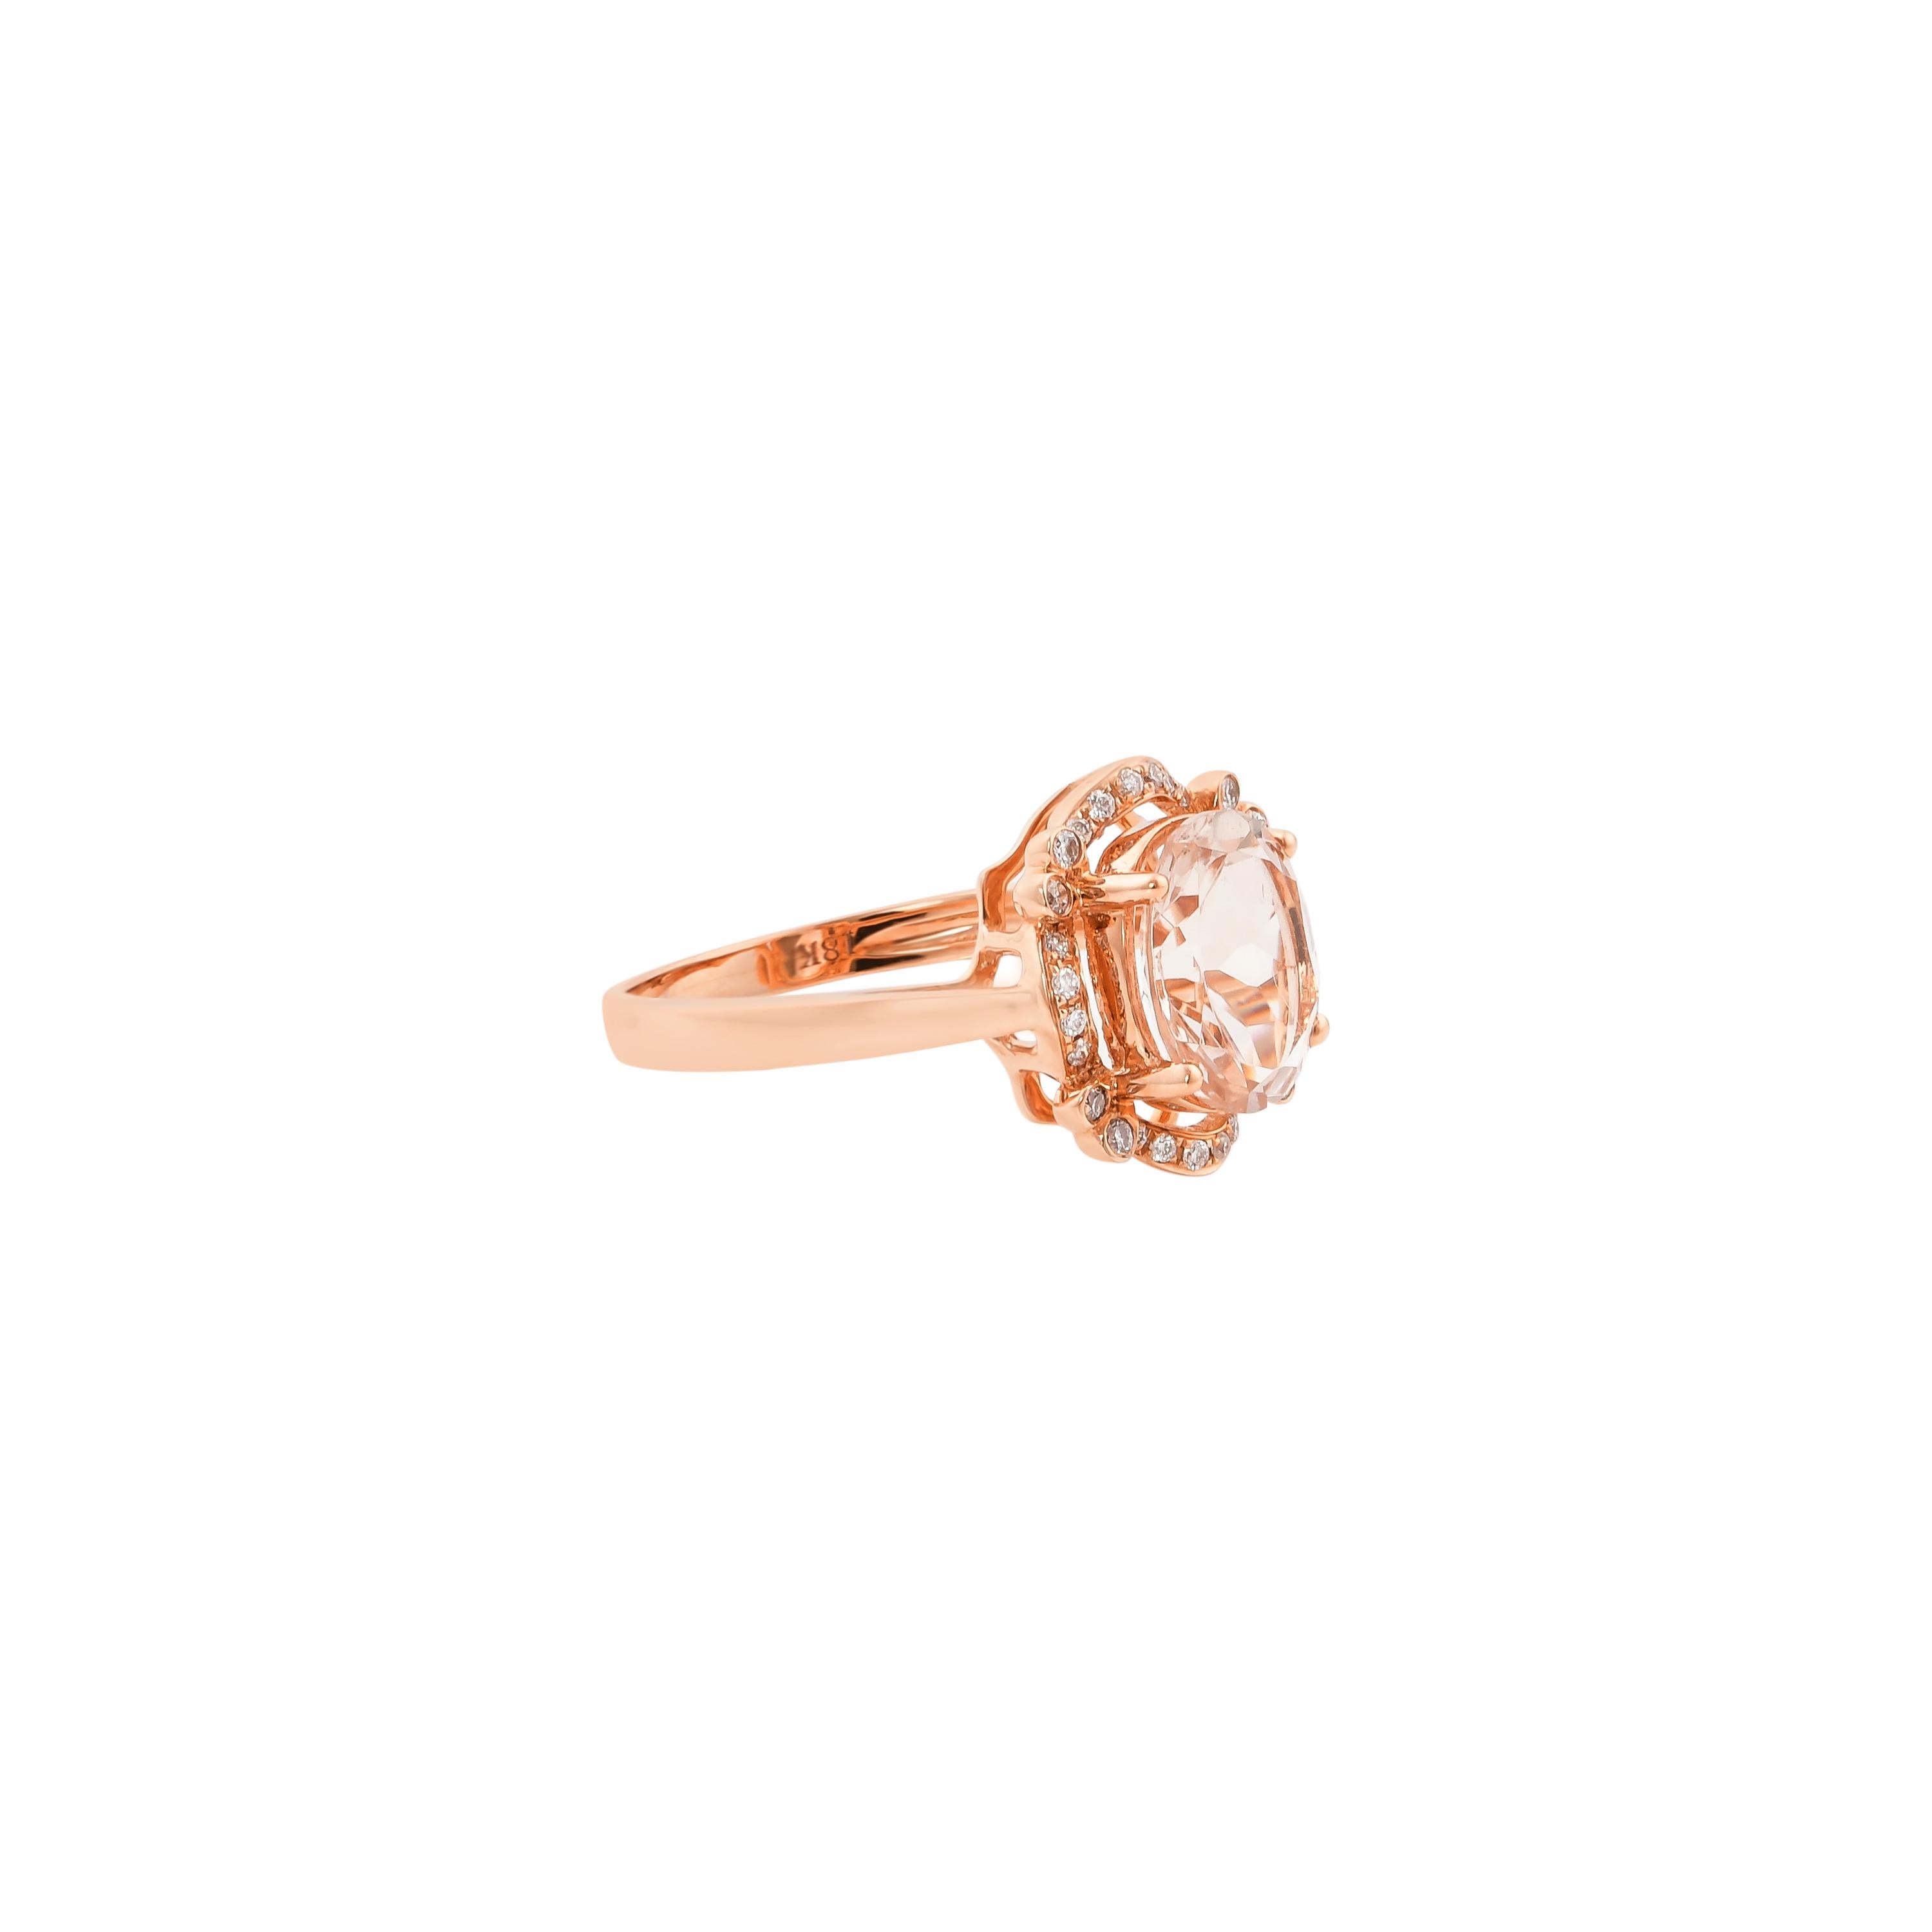 Contemporary 2.2 Carat Morganite and Diamond Ring in 18 Karat Rose Gold